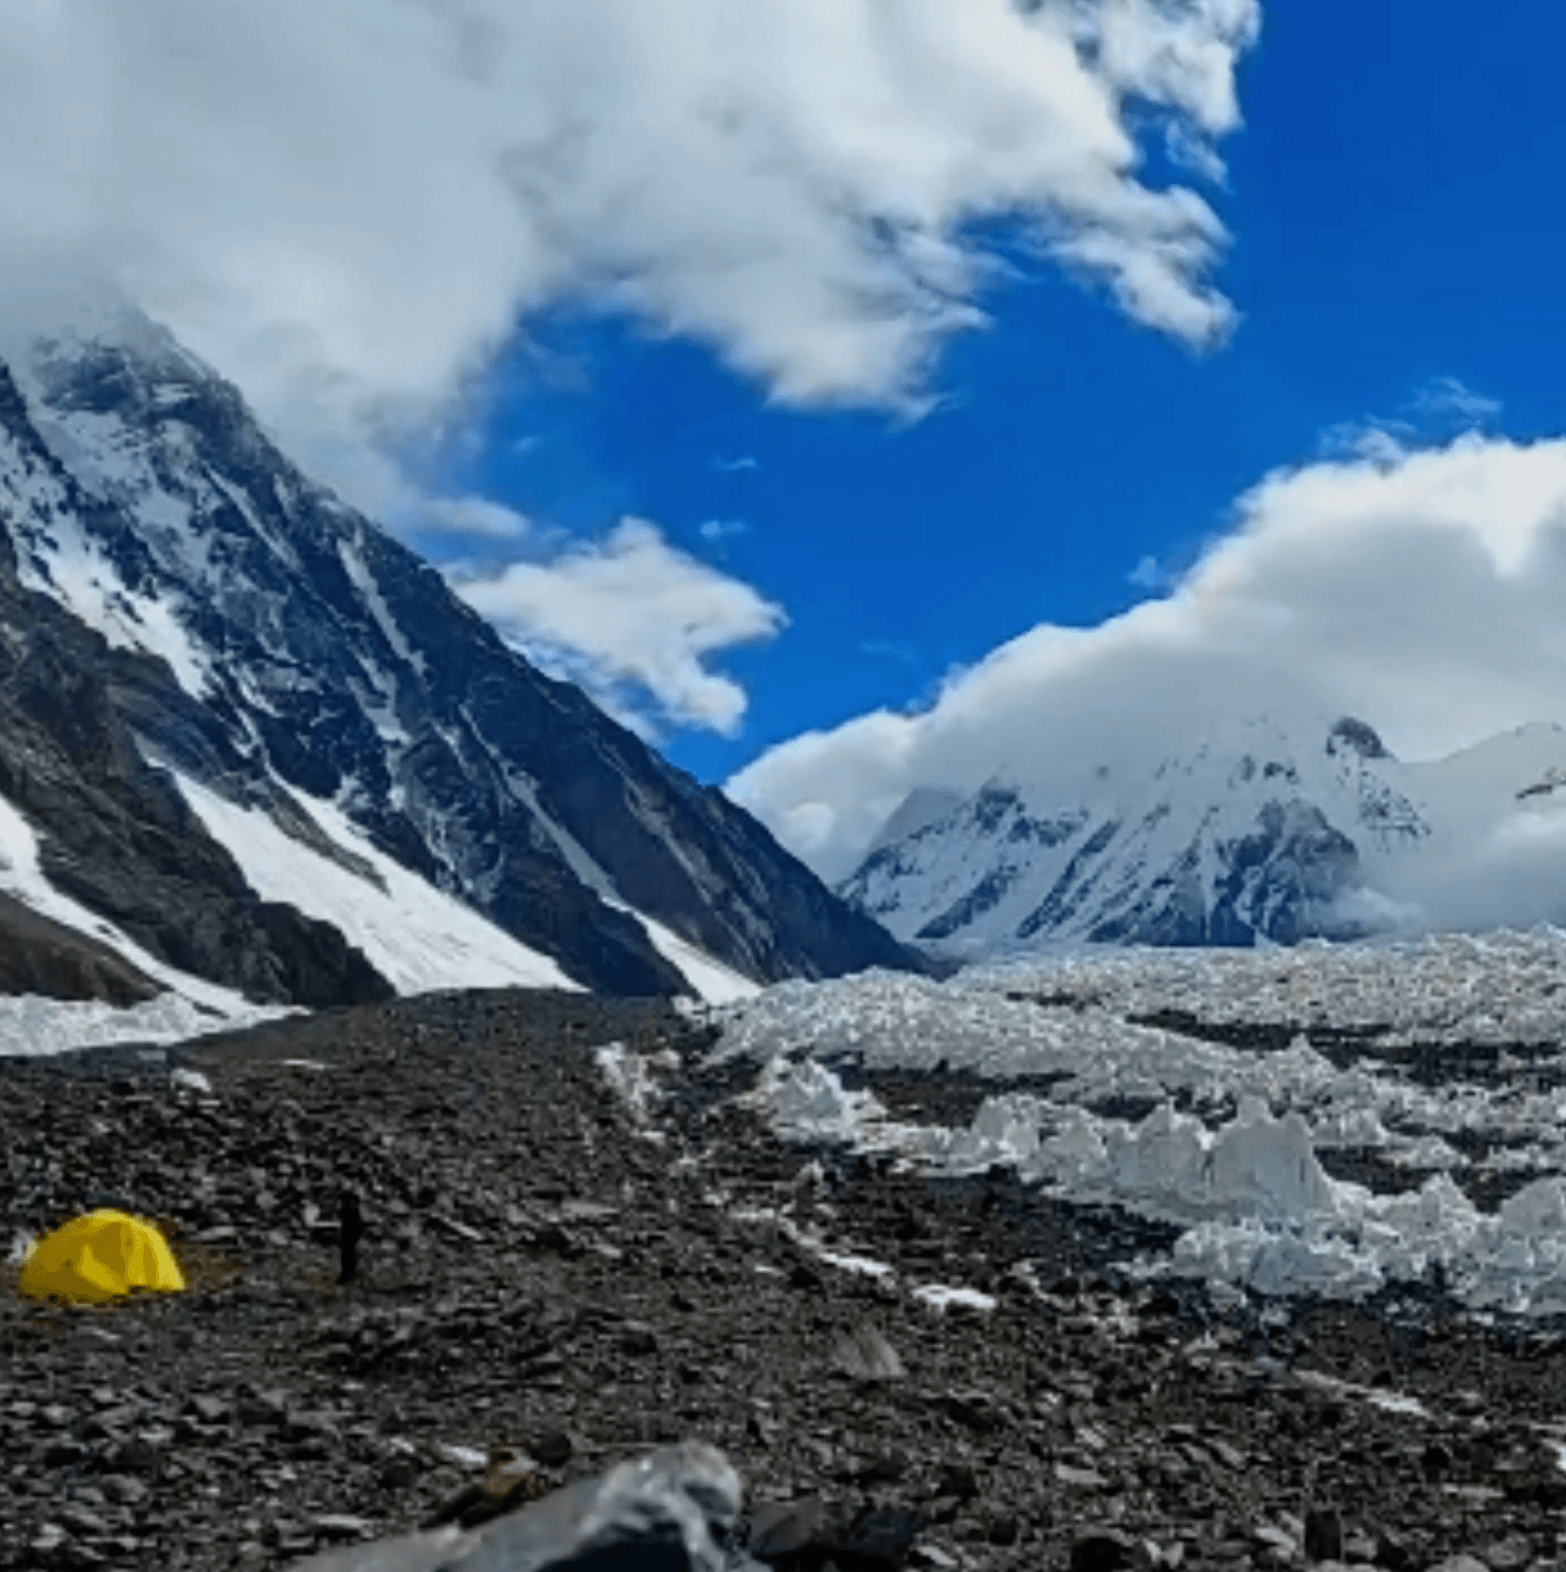 K2 Collection 1/1: Base Camp. 4,900 m/16,400 ft